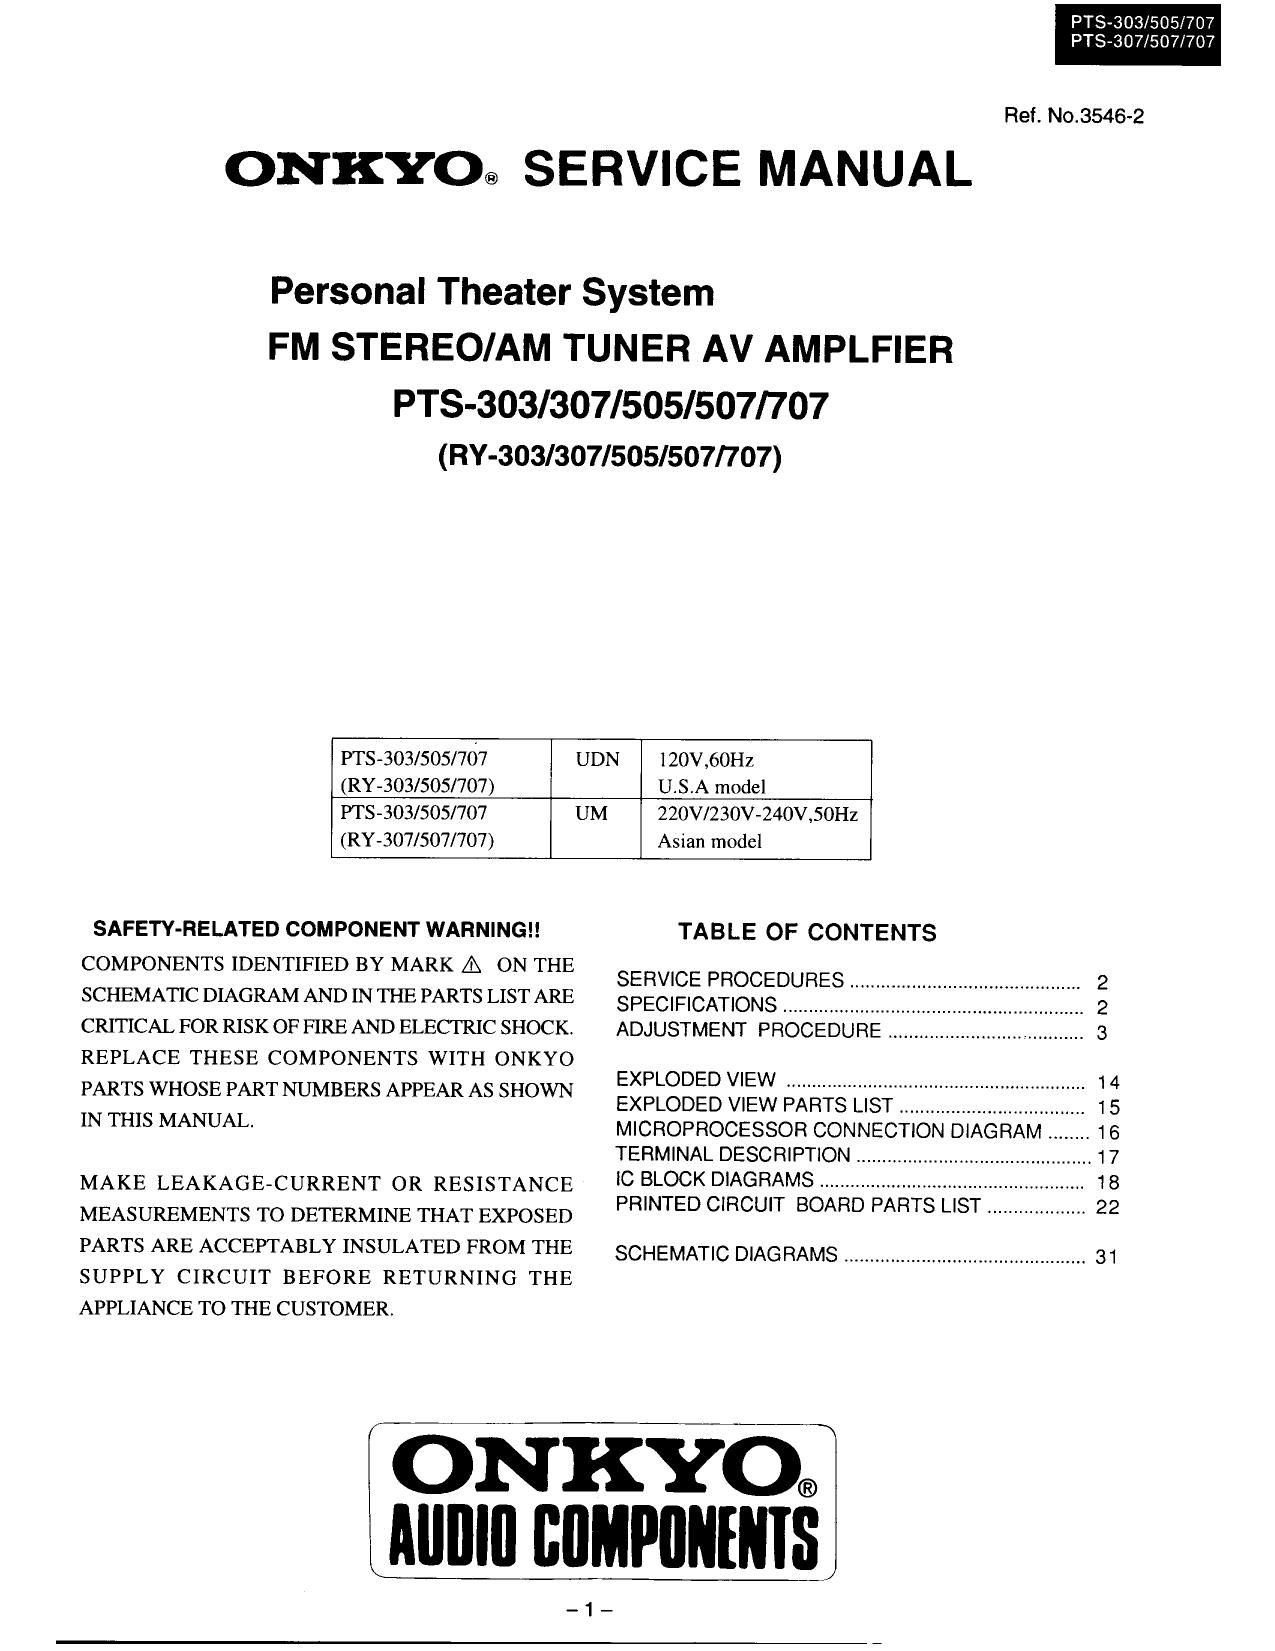 Onkyo PTS 307 Service Manual